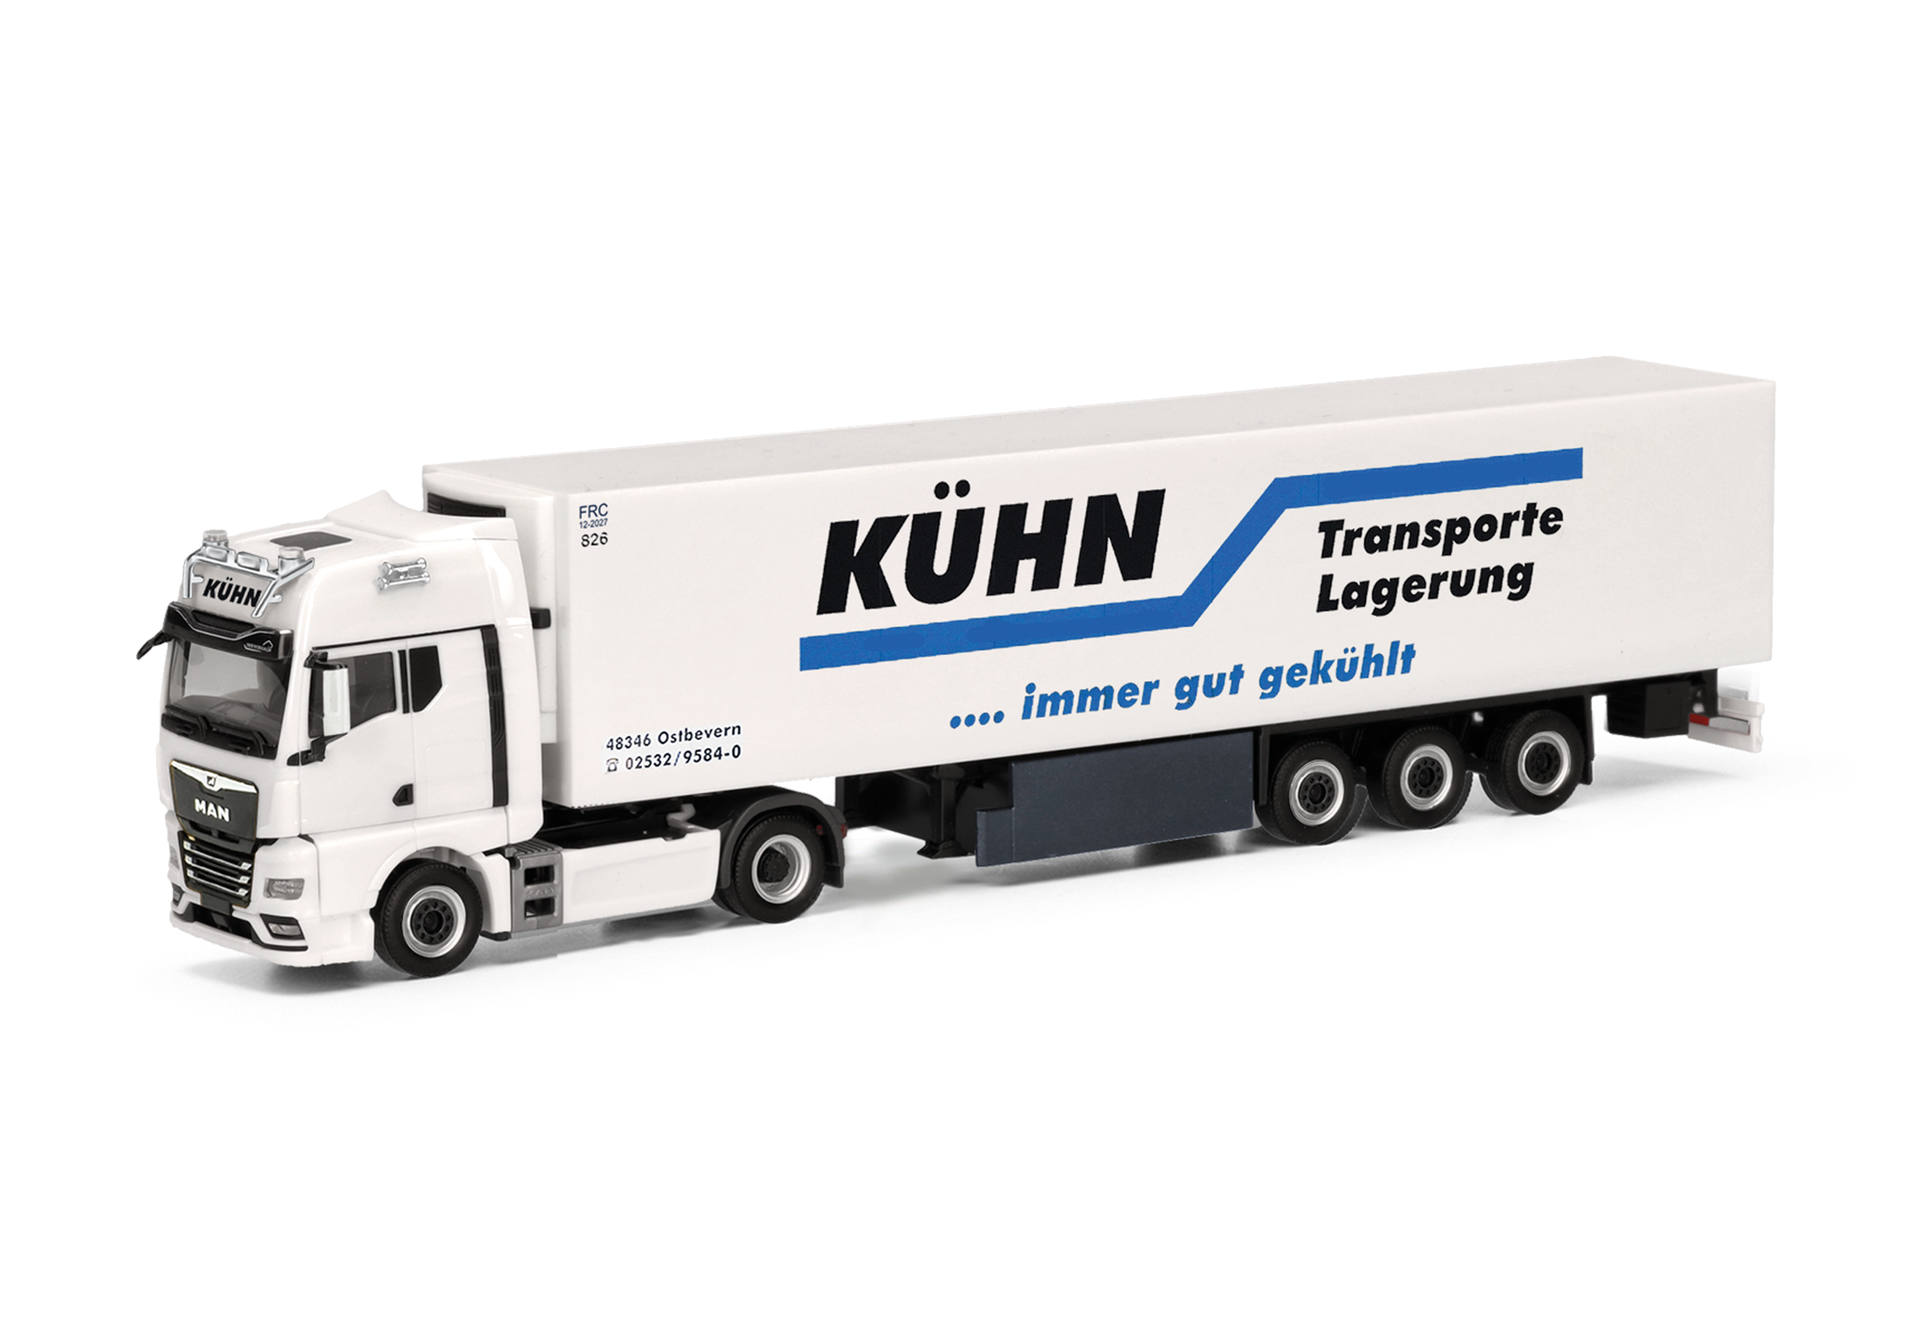 MAN TGX GX refrigerated box semitrailer truck "Kühn Kühltransporte" (North Rhine-Westphalia/Ostbevern)